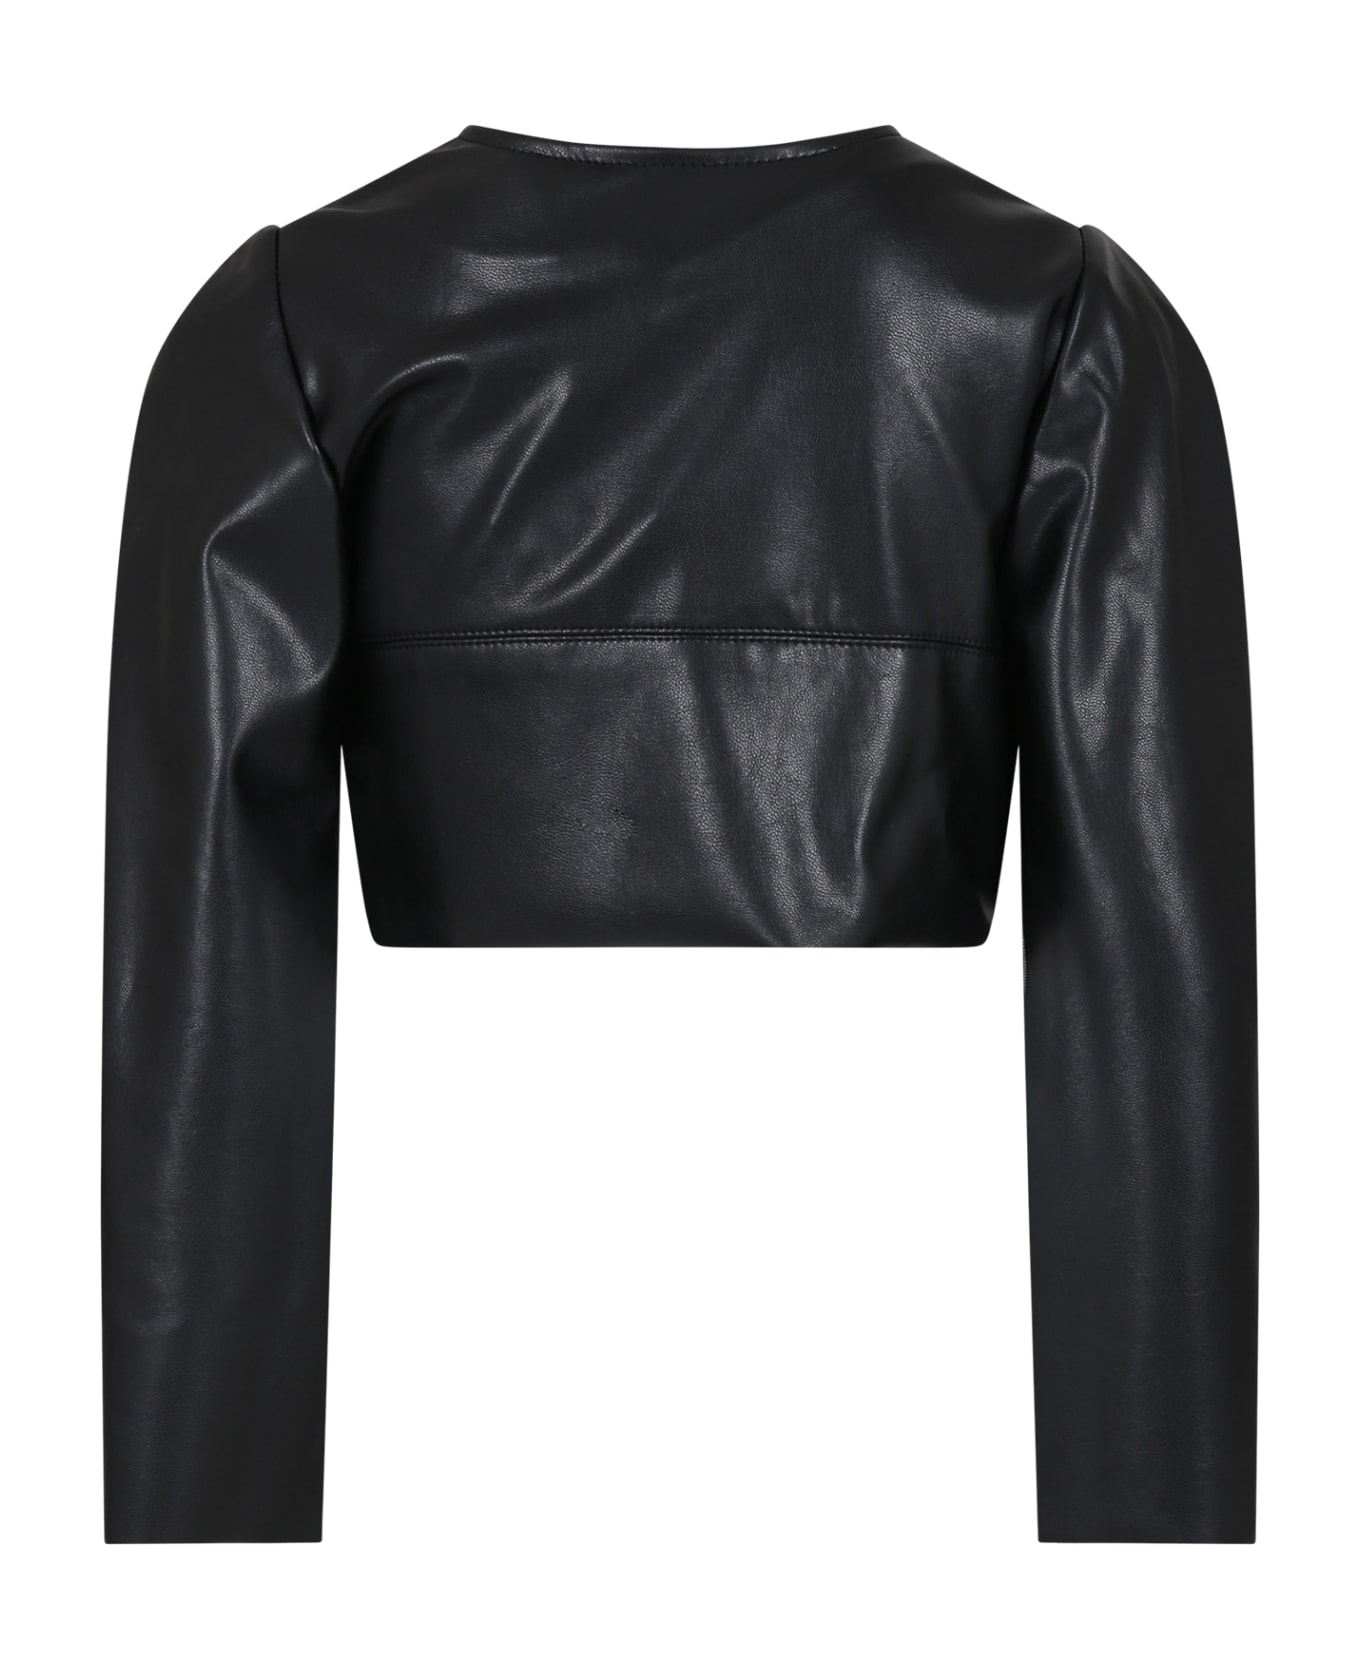 Monnalisa Black Jacket For Girl With Logo - Black